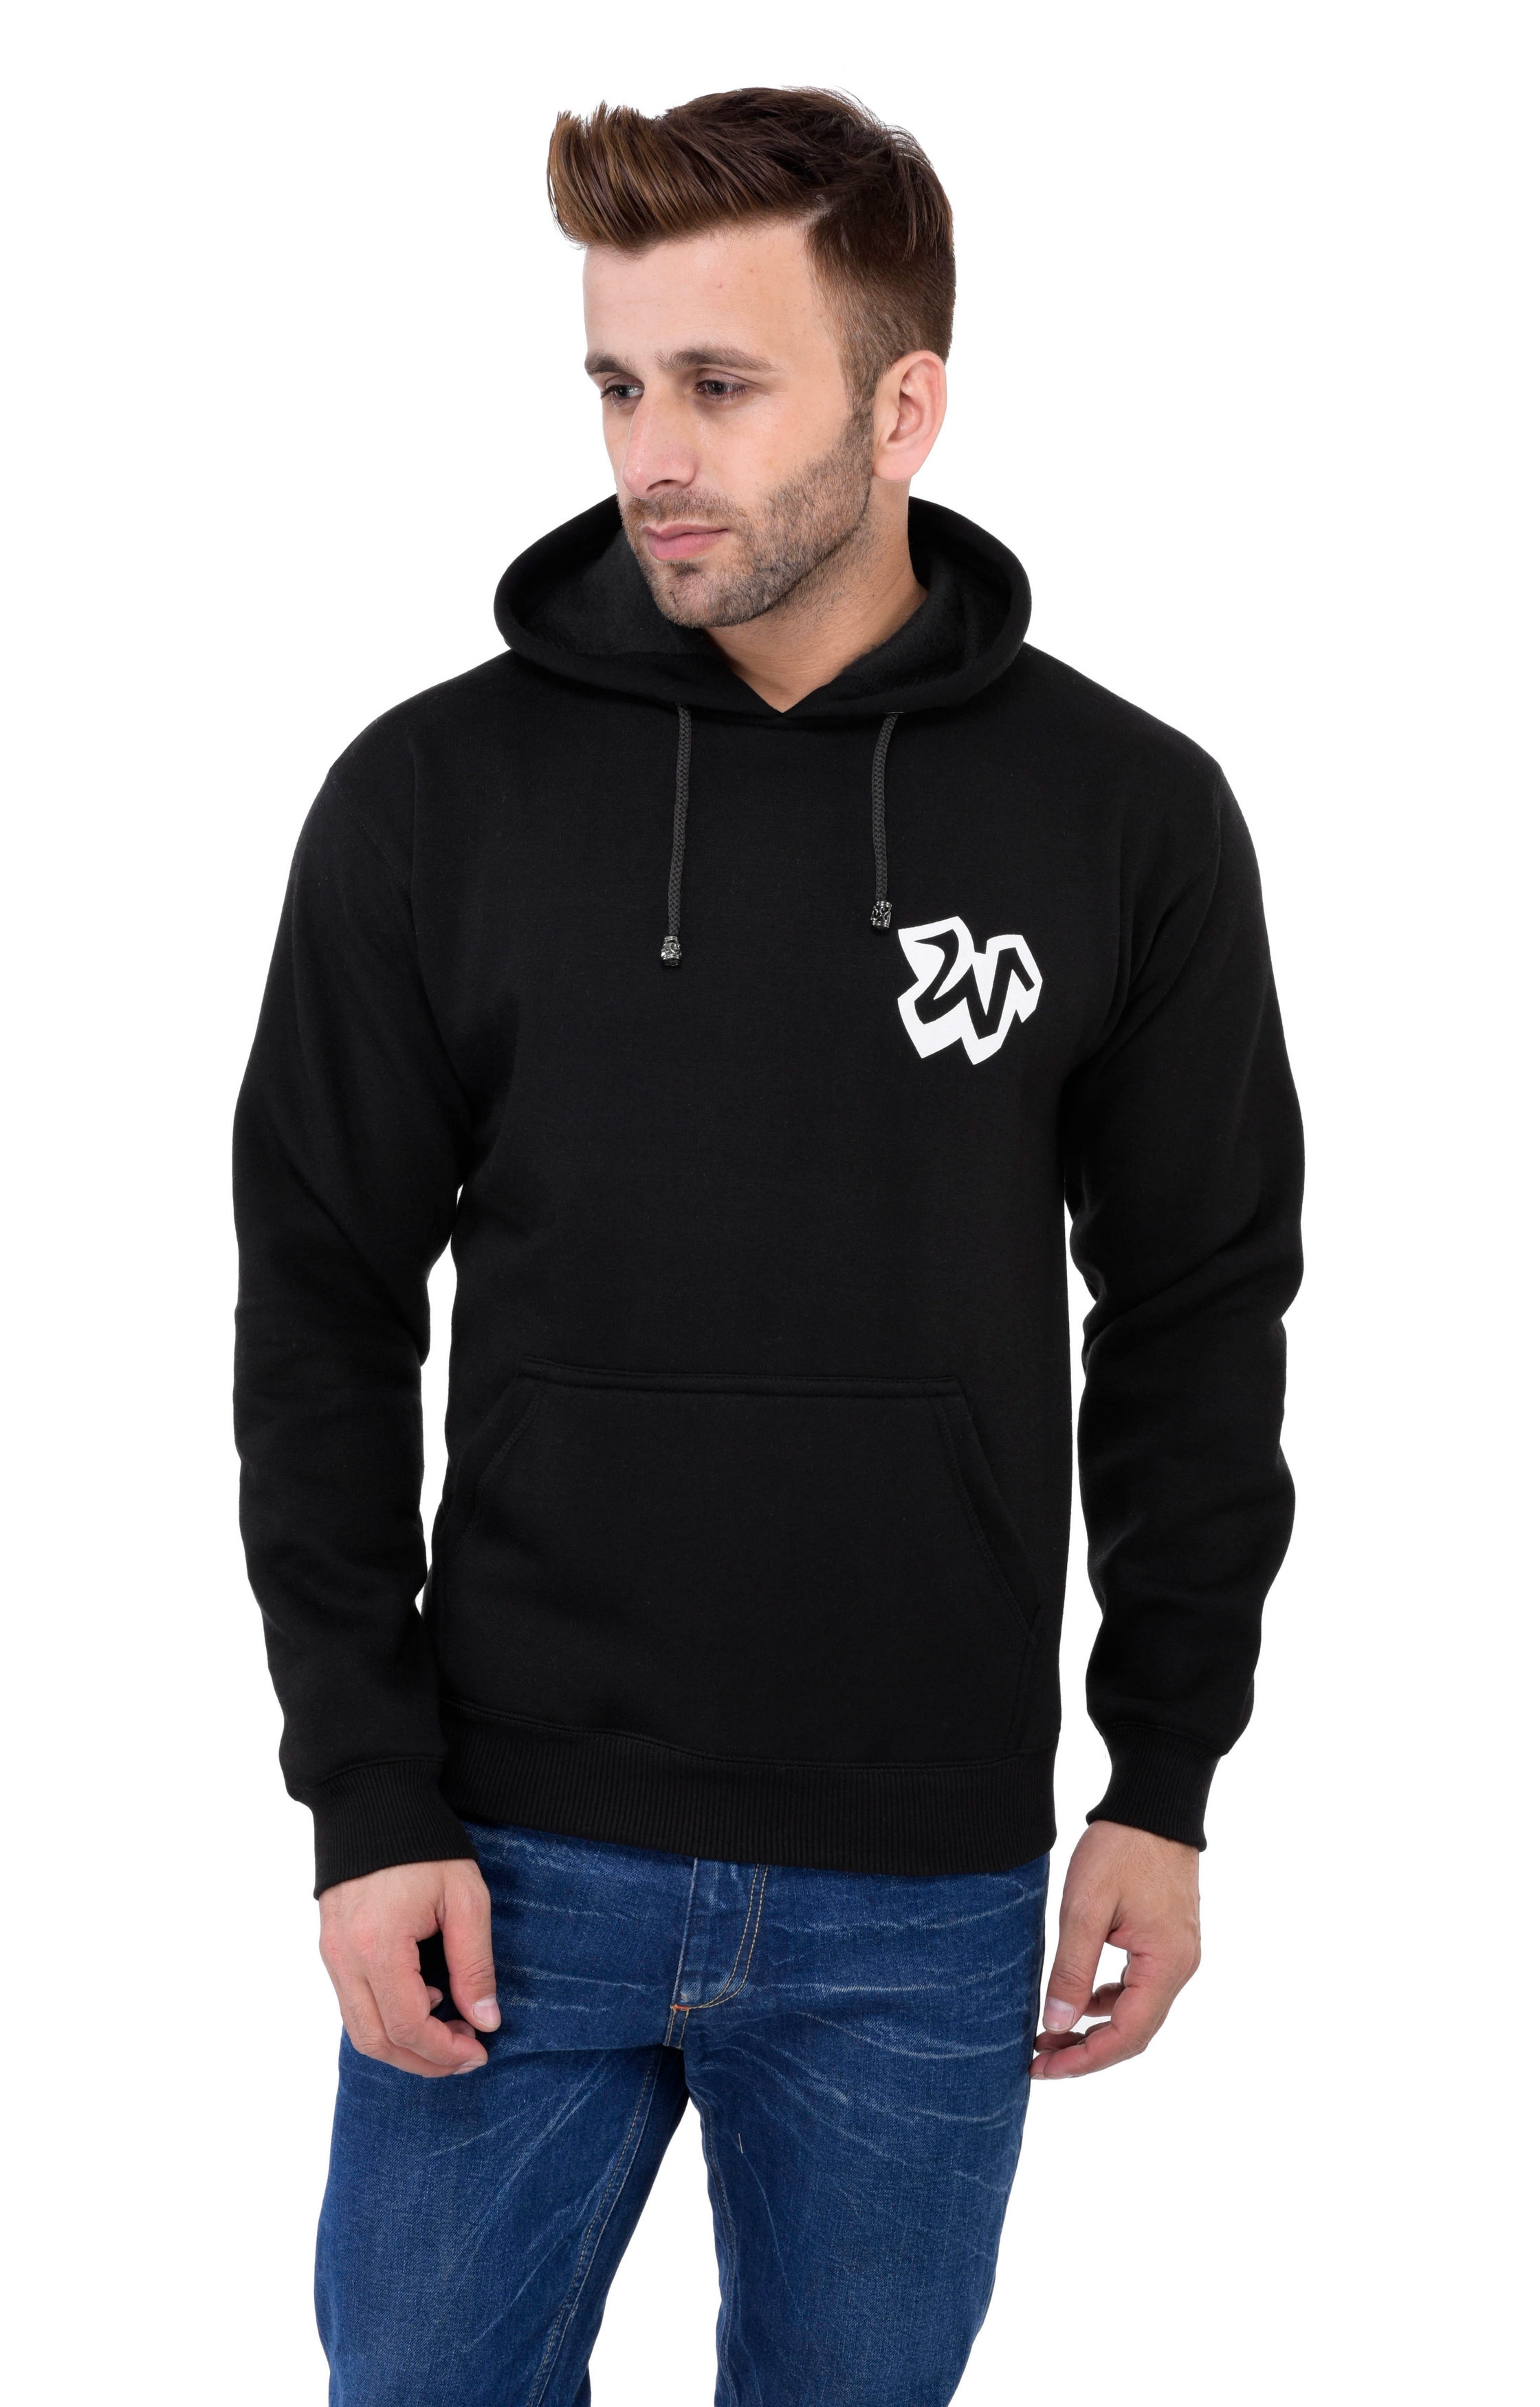 Weardo | Black Stylish W Printed Hooded Sweatshirt 